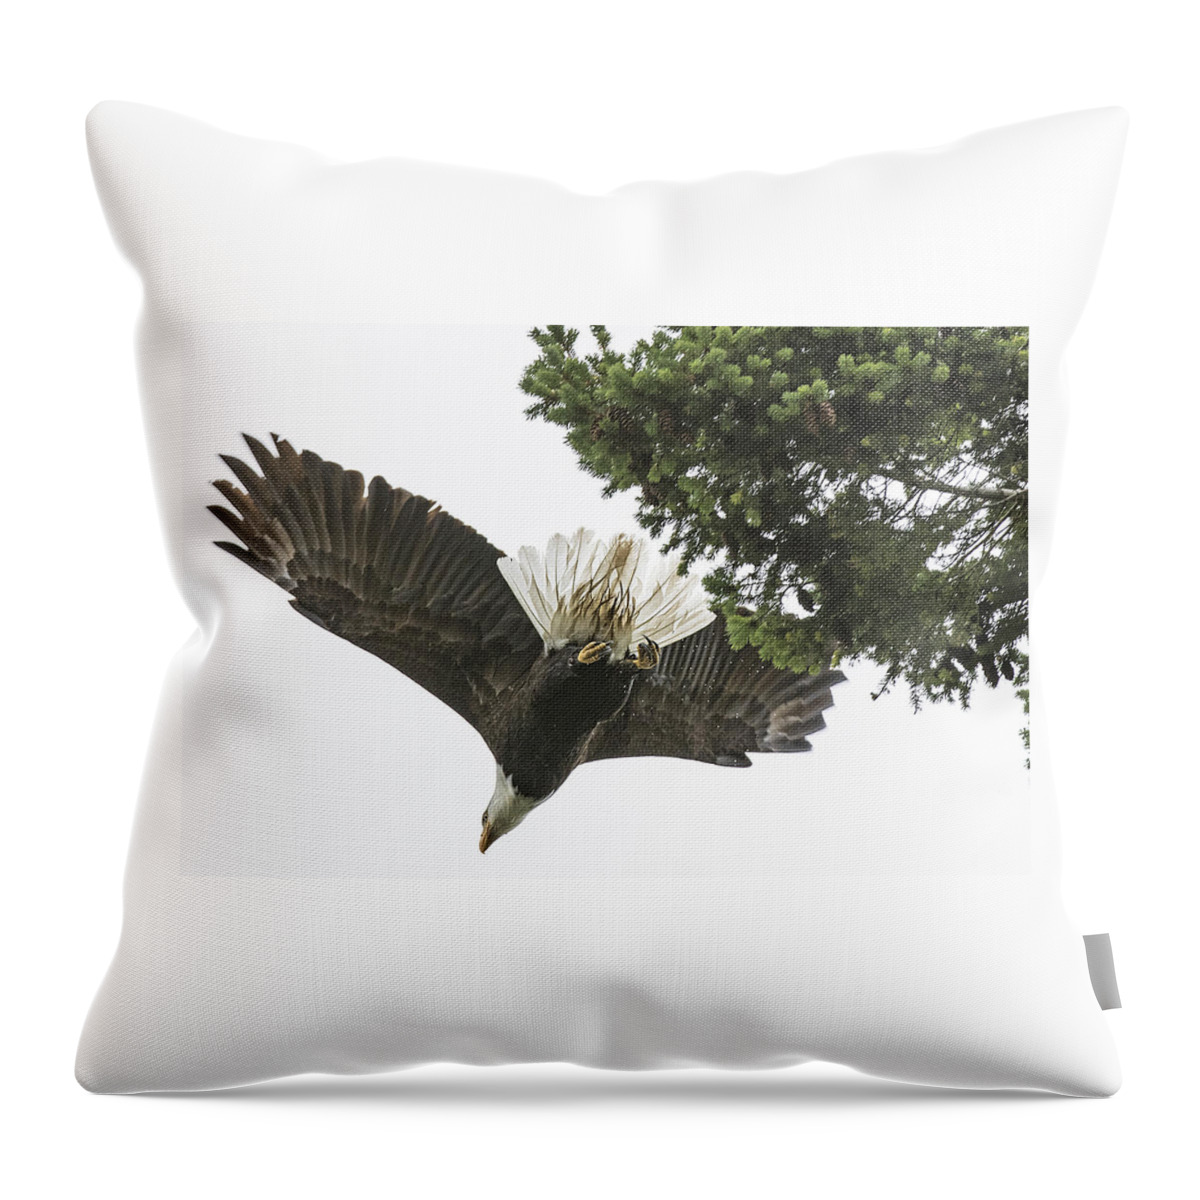 Bald Eagle Throw Pillow featuring the photograph Bald Eagle Takes Flight by Matt McDonald